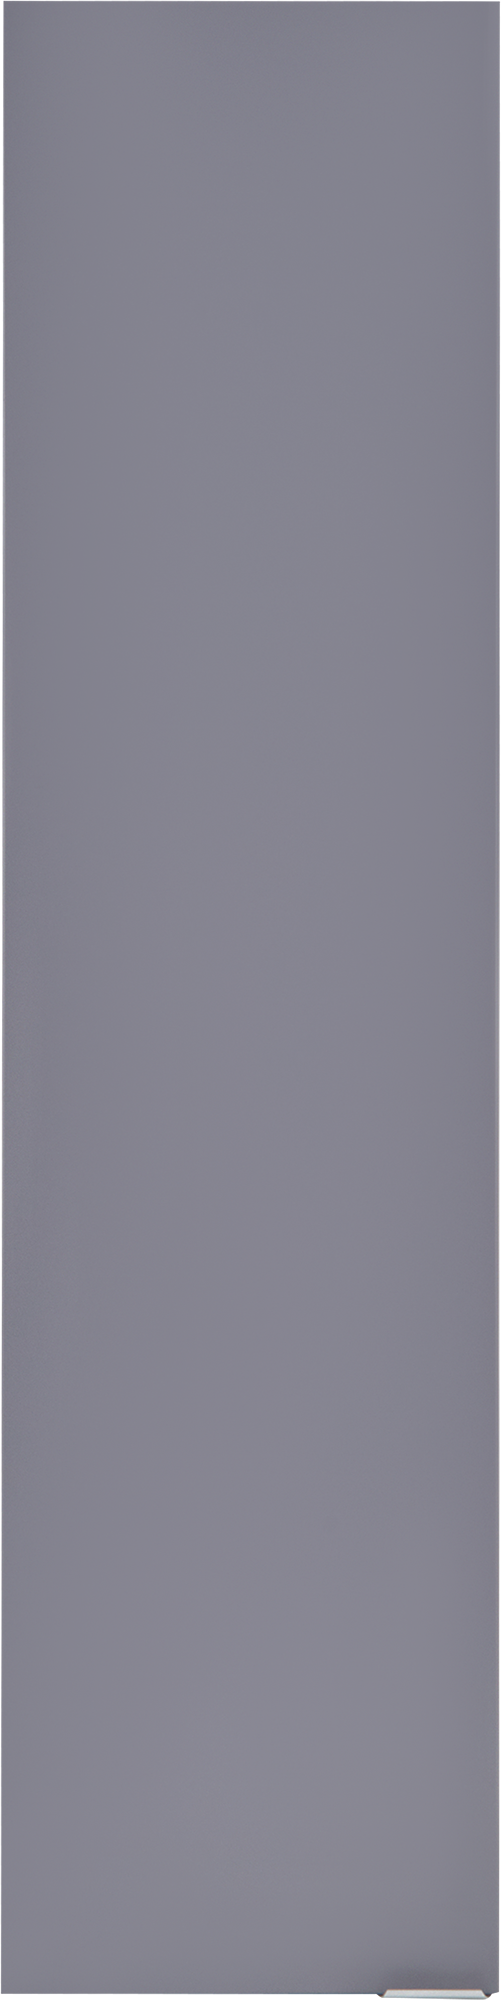 82407455 Фасад шкафа подвесного Смарт 20x80 см цвет серый матовый STLM-0026845 SENSEA